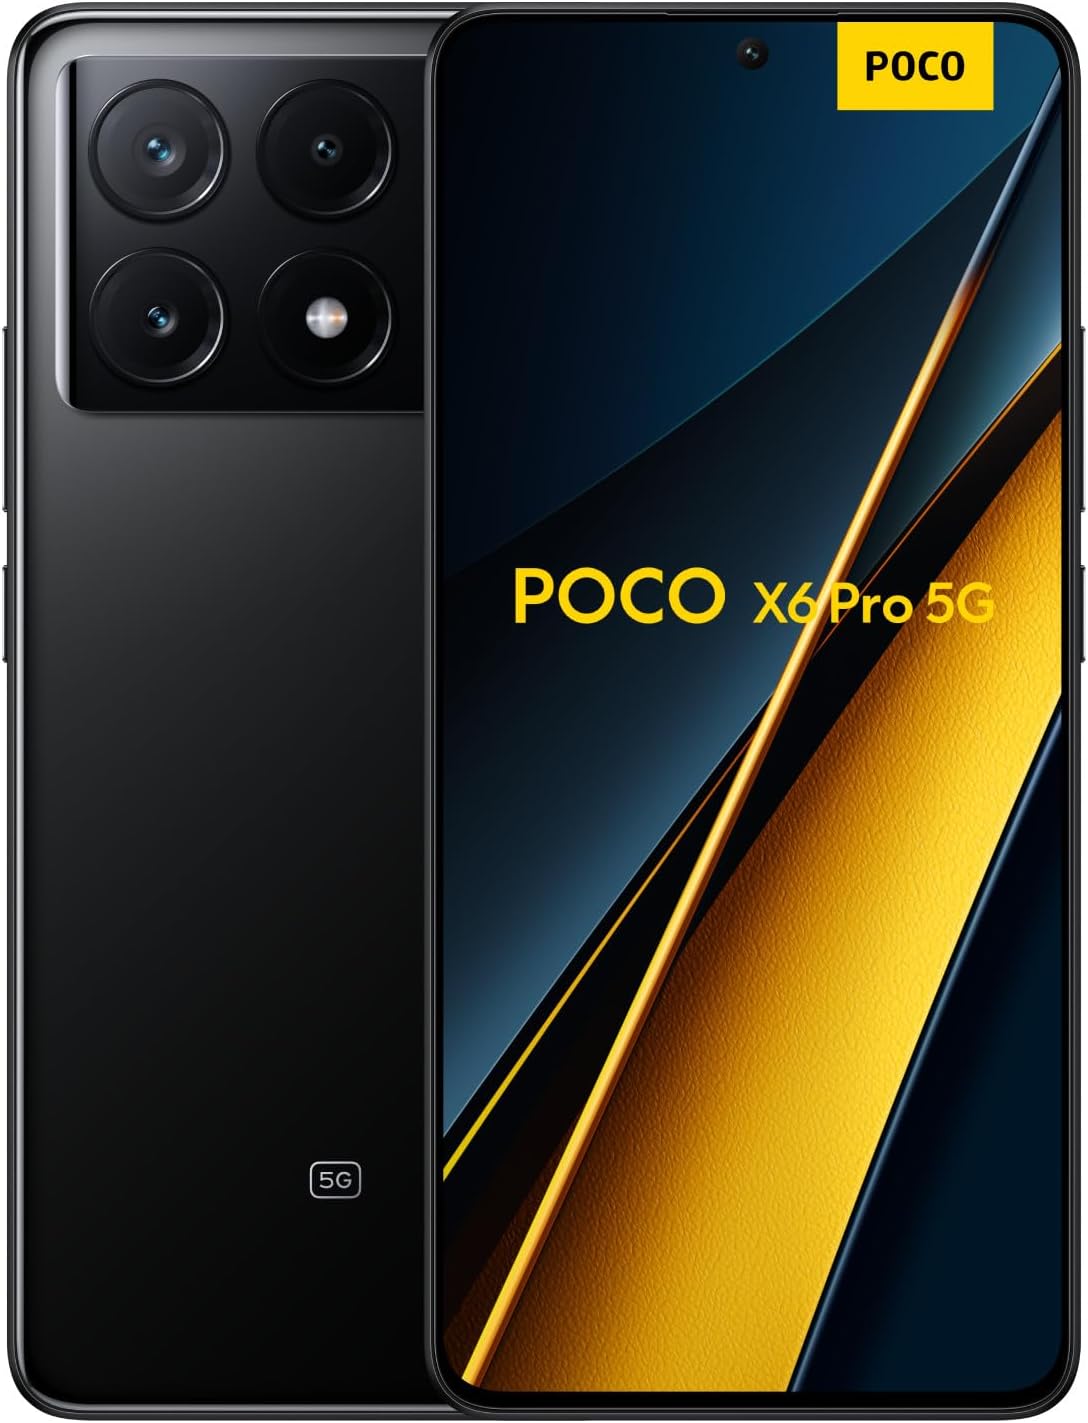 Poco X6 Pro 5G